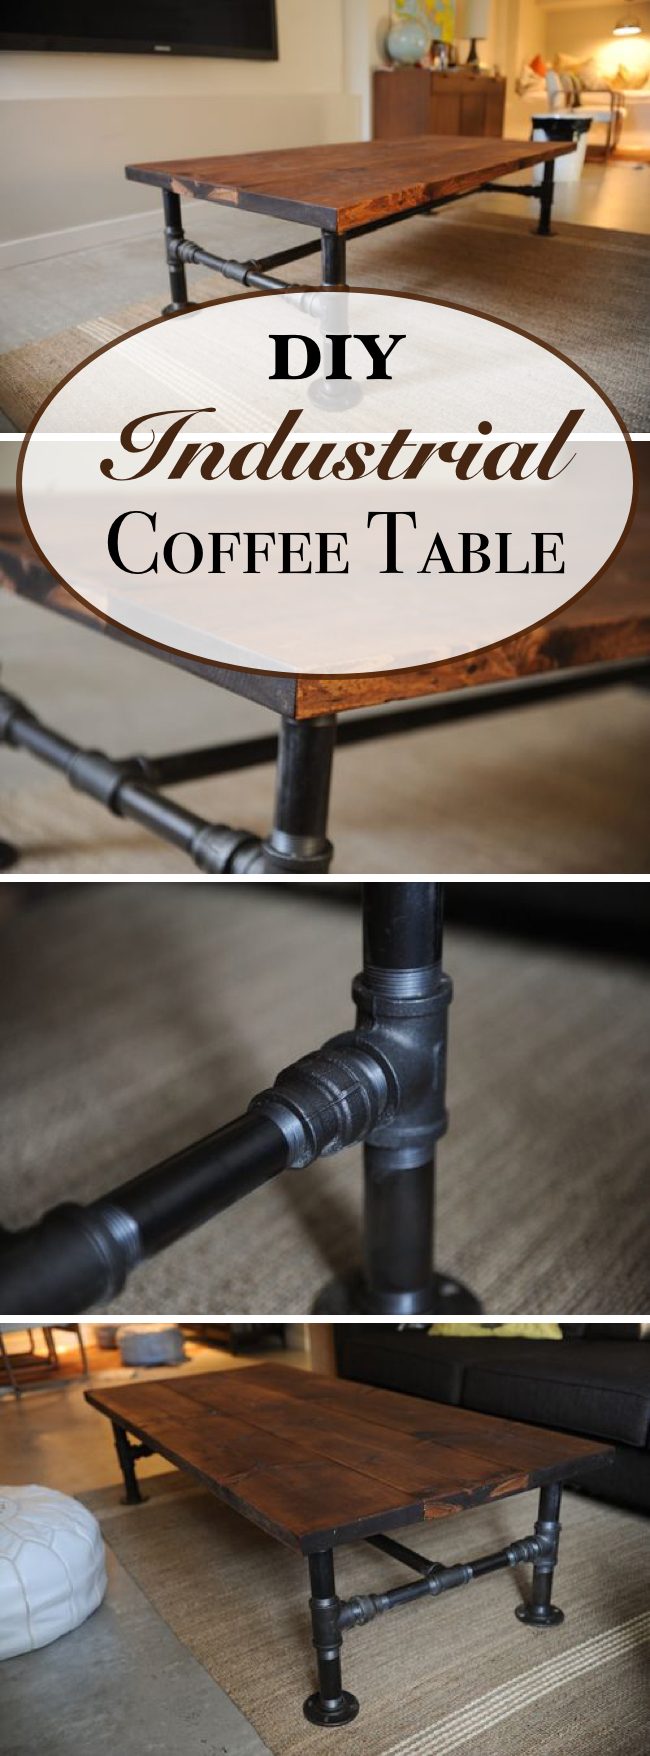 Industrial Coffee Table DIY